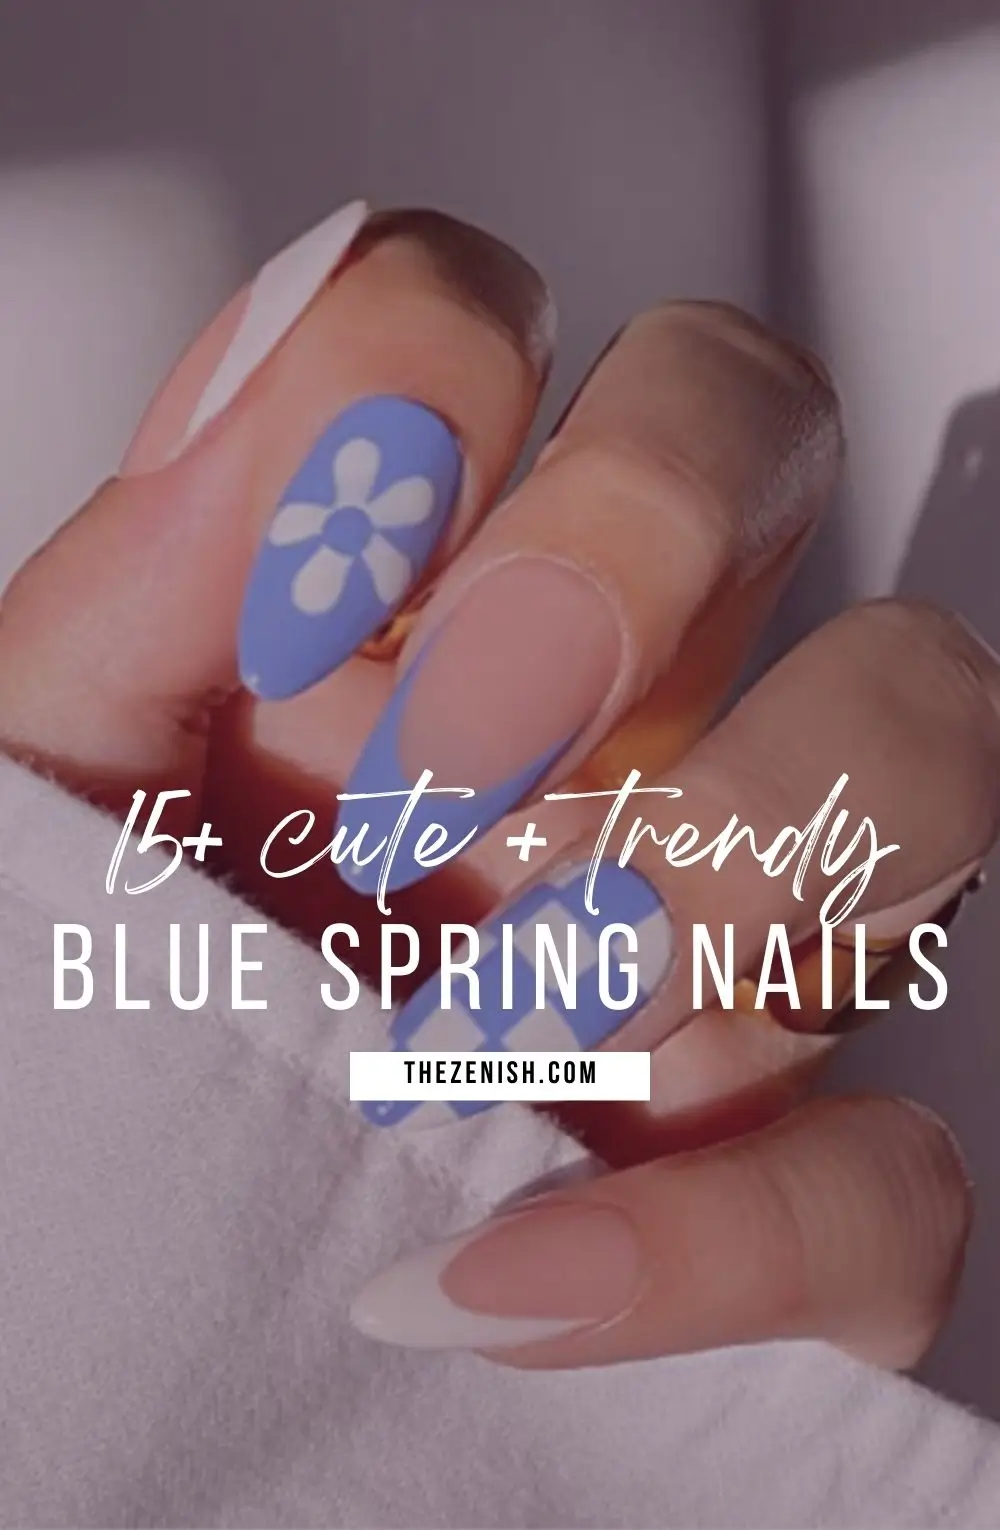 25 Stunning Blue Spring Nails I'm Loving 3 25 Stunning Blue Spring Nails I'm Loving